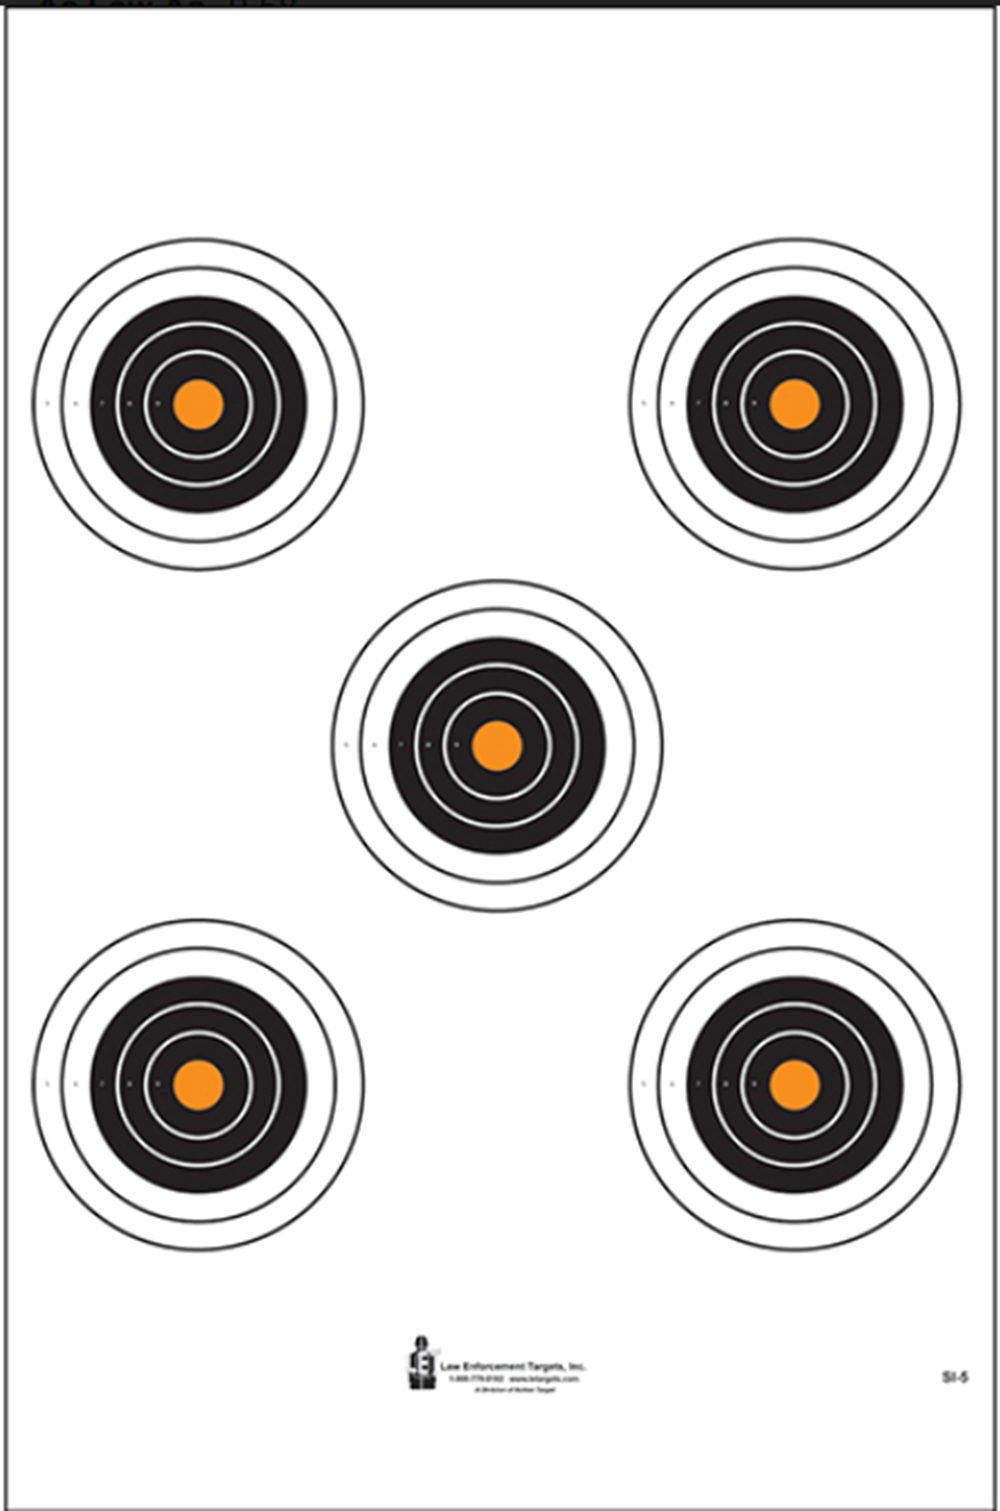 Action Target 5 Bull's-Eye Targets w/ Orange Centers 21" x 24" 100 Pack SI-5-100